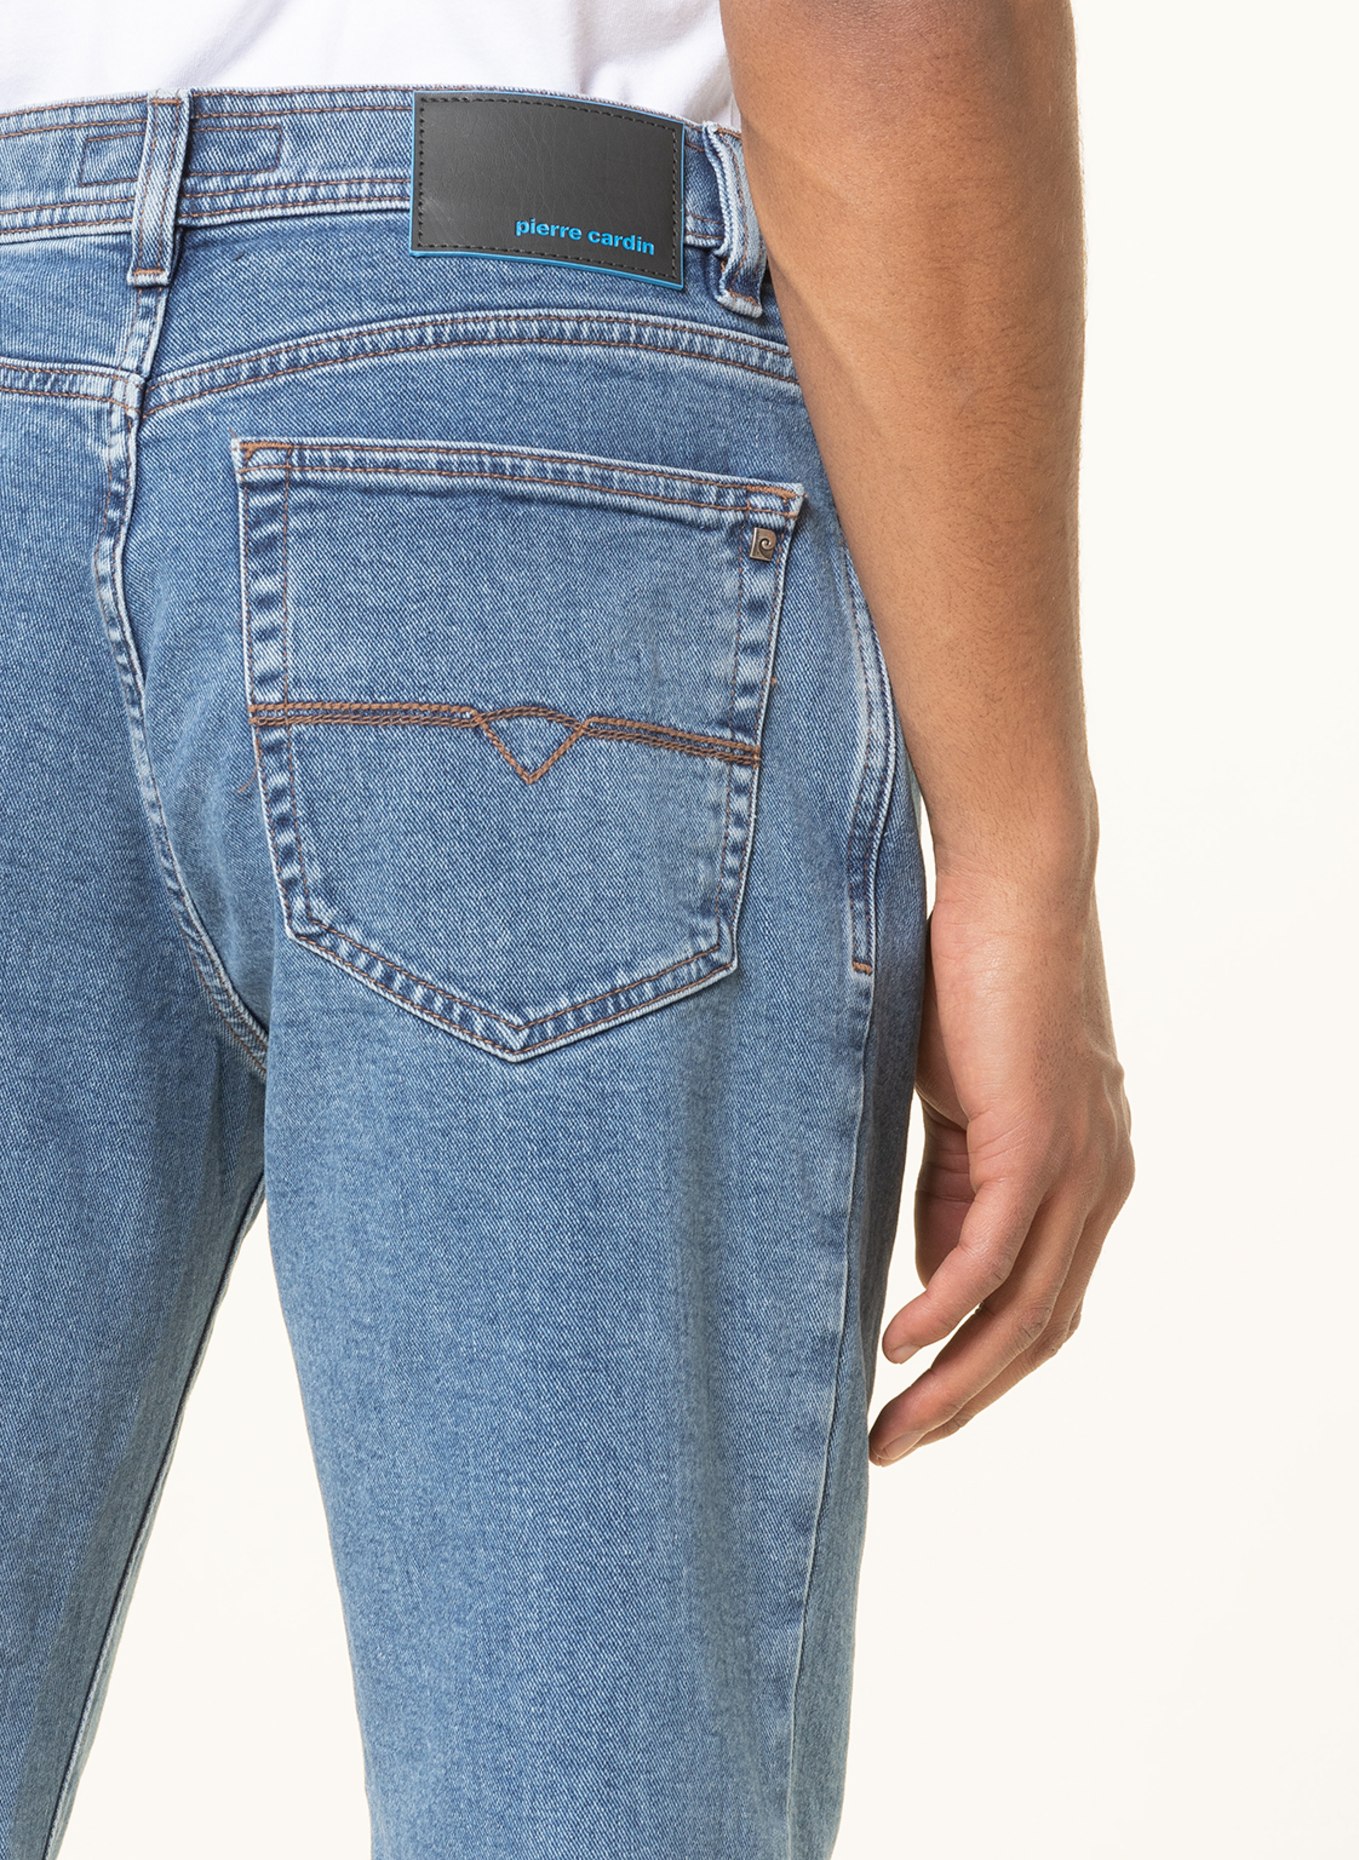 pierre cardin Jeans DIJON Comfort Fit, Color: 6812 dark blue used (Image 5)